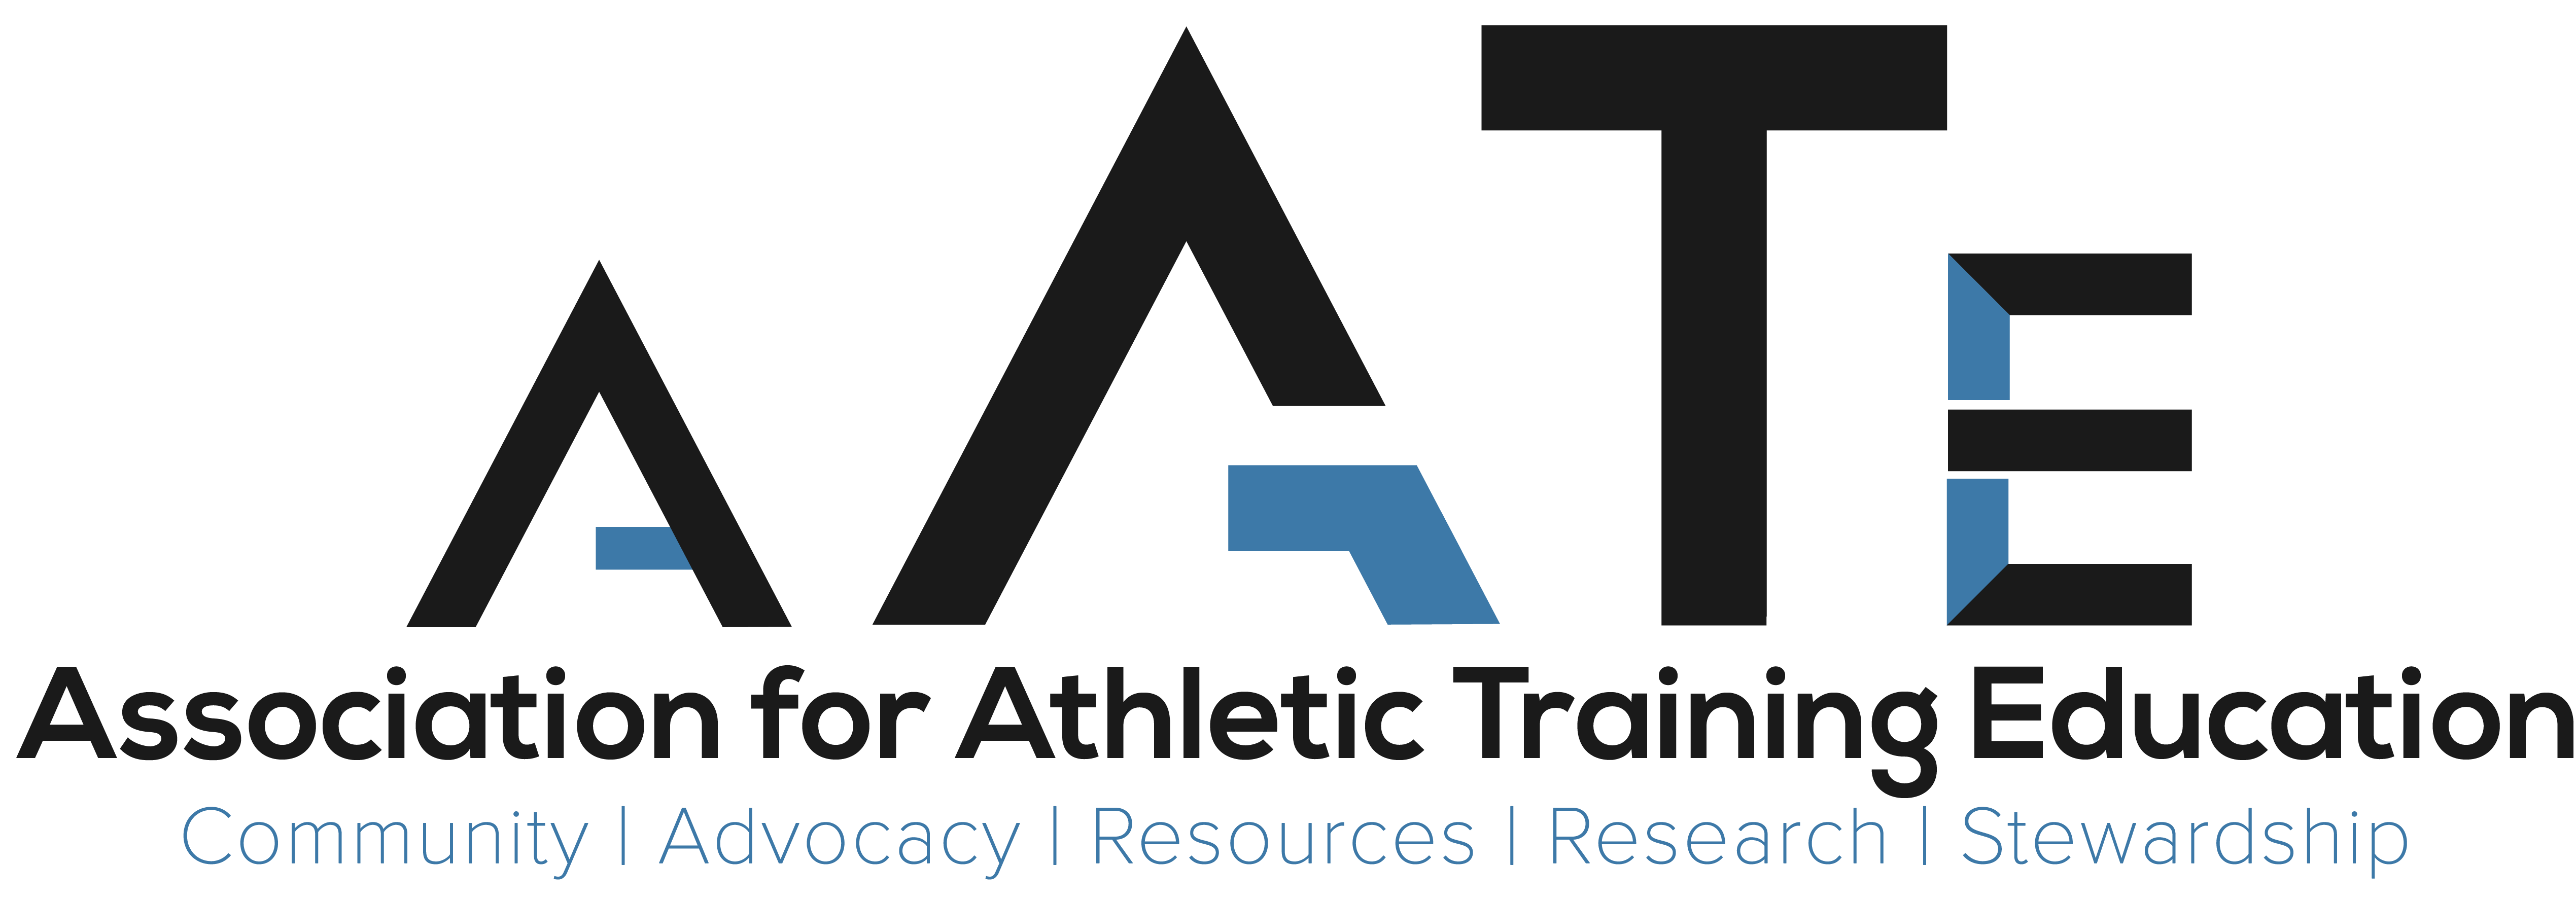 Association for Athletic Training Education